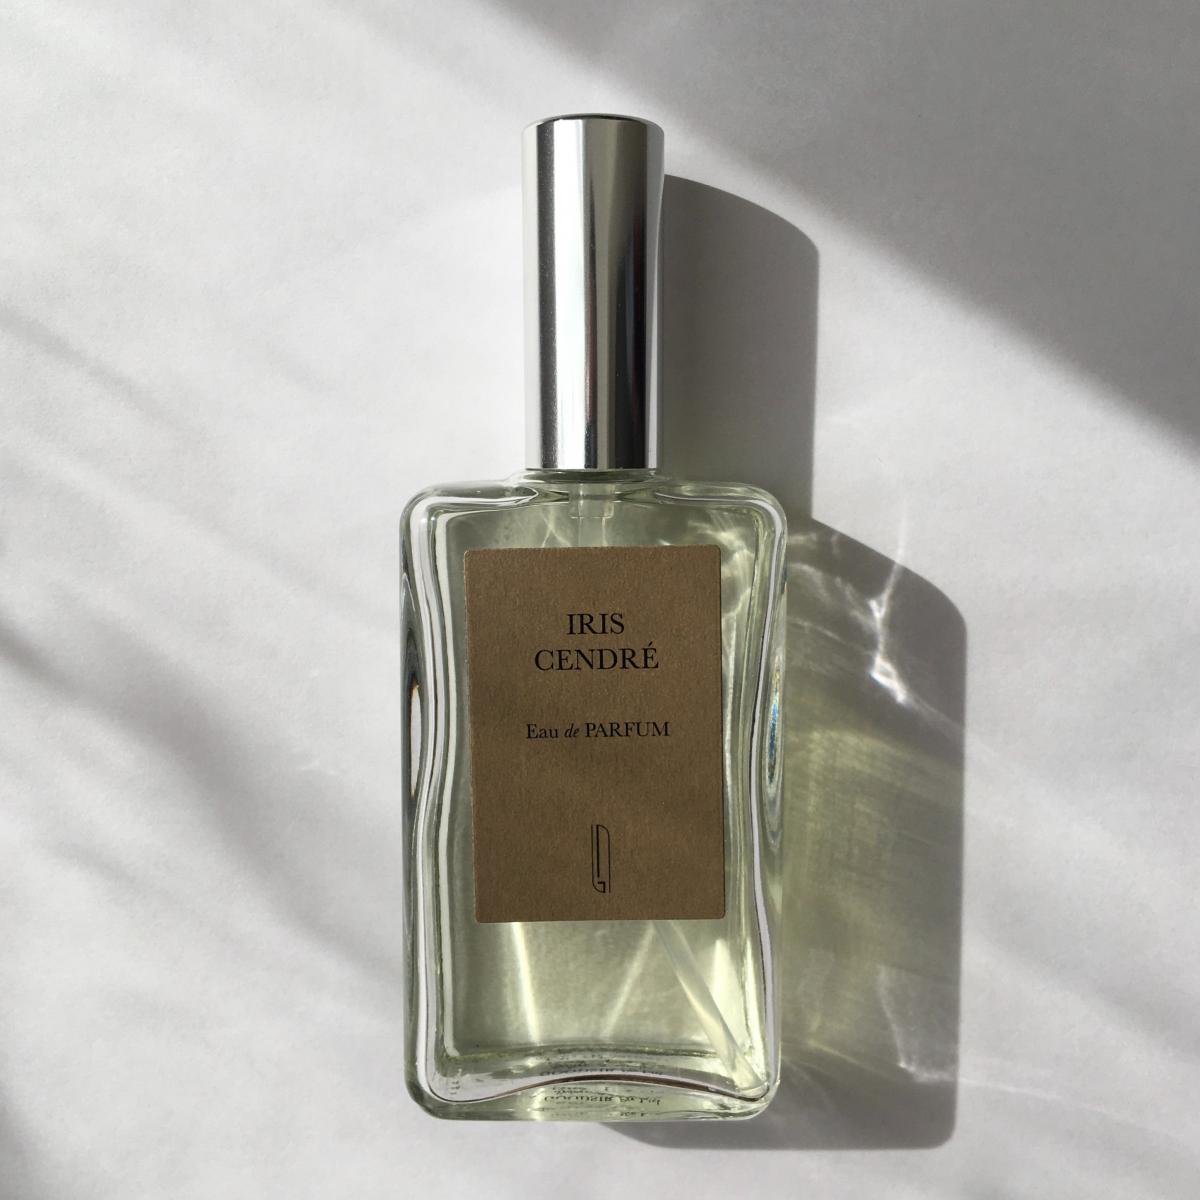 Iris Cendre Naomi Goodsir perfume - a fragrance for women and men 2015